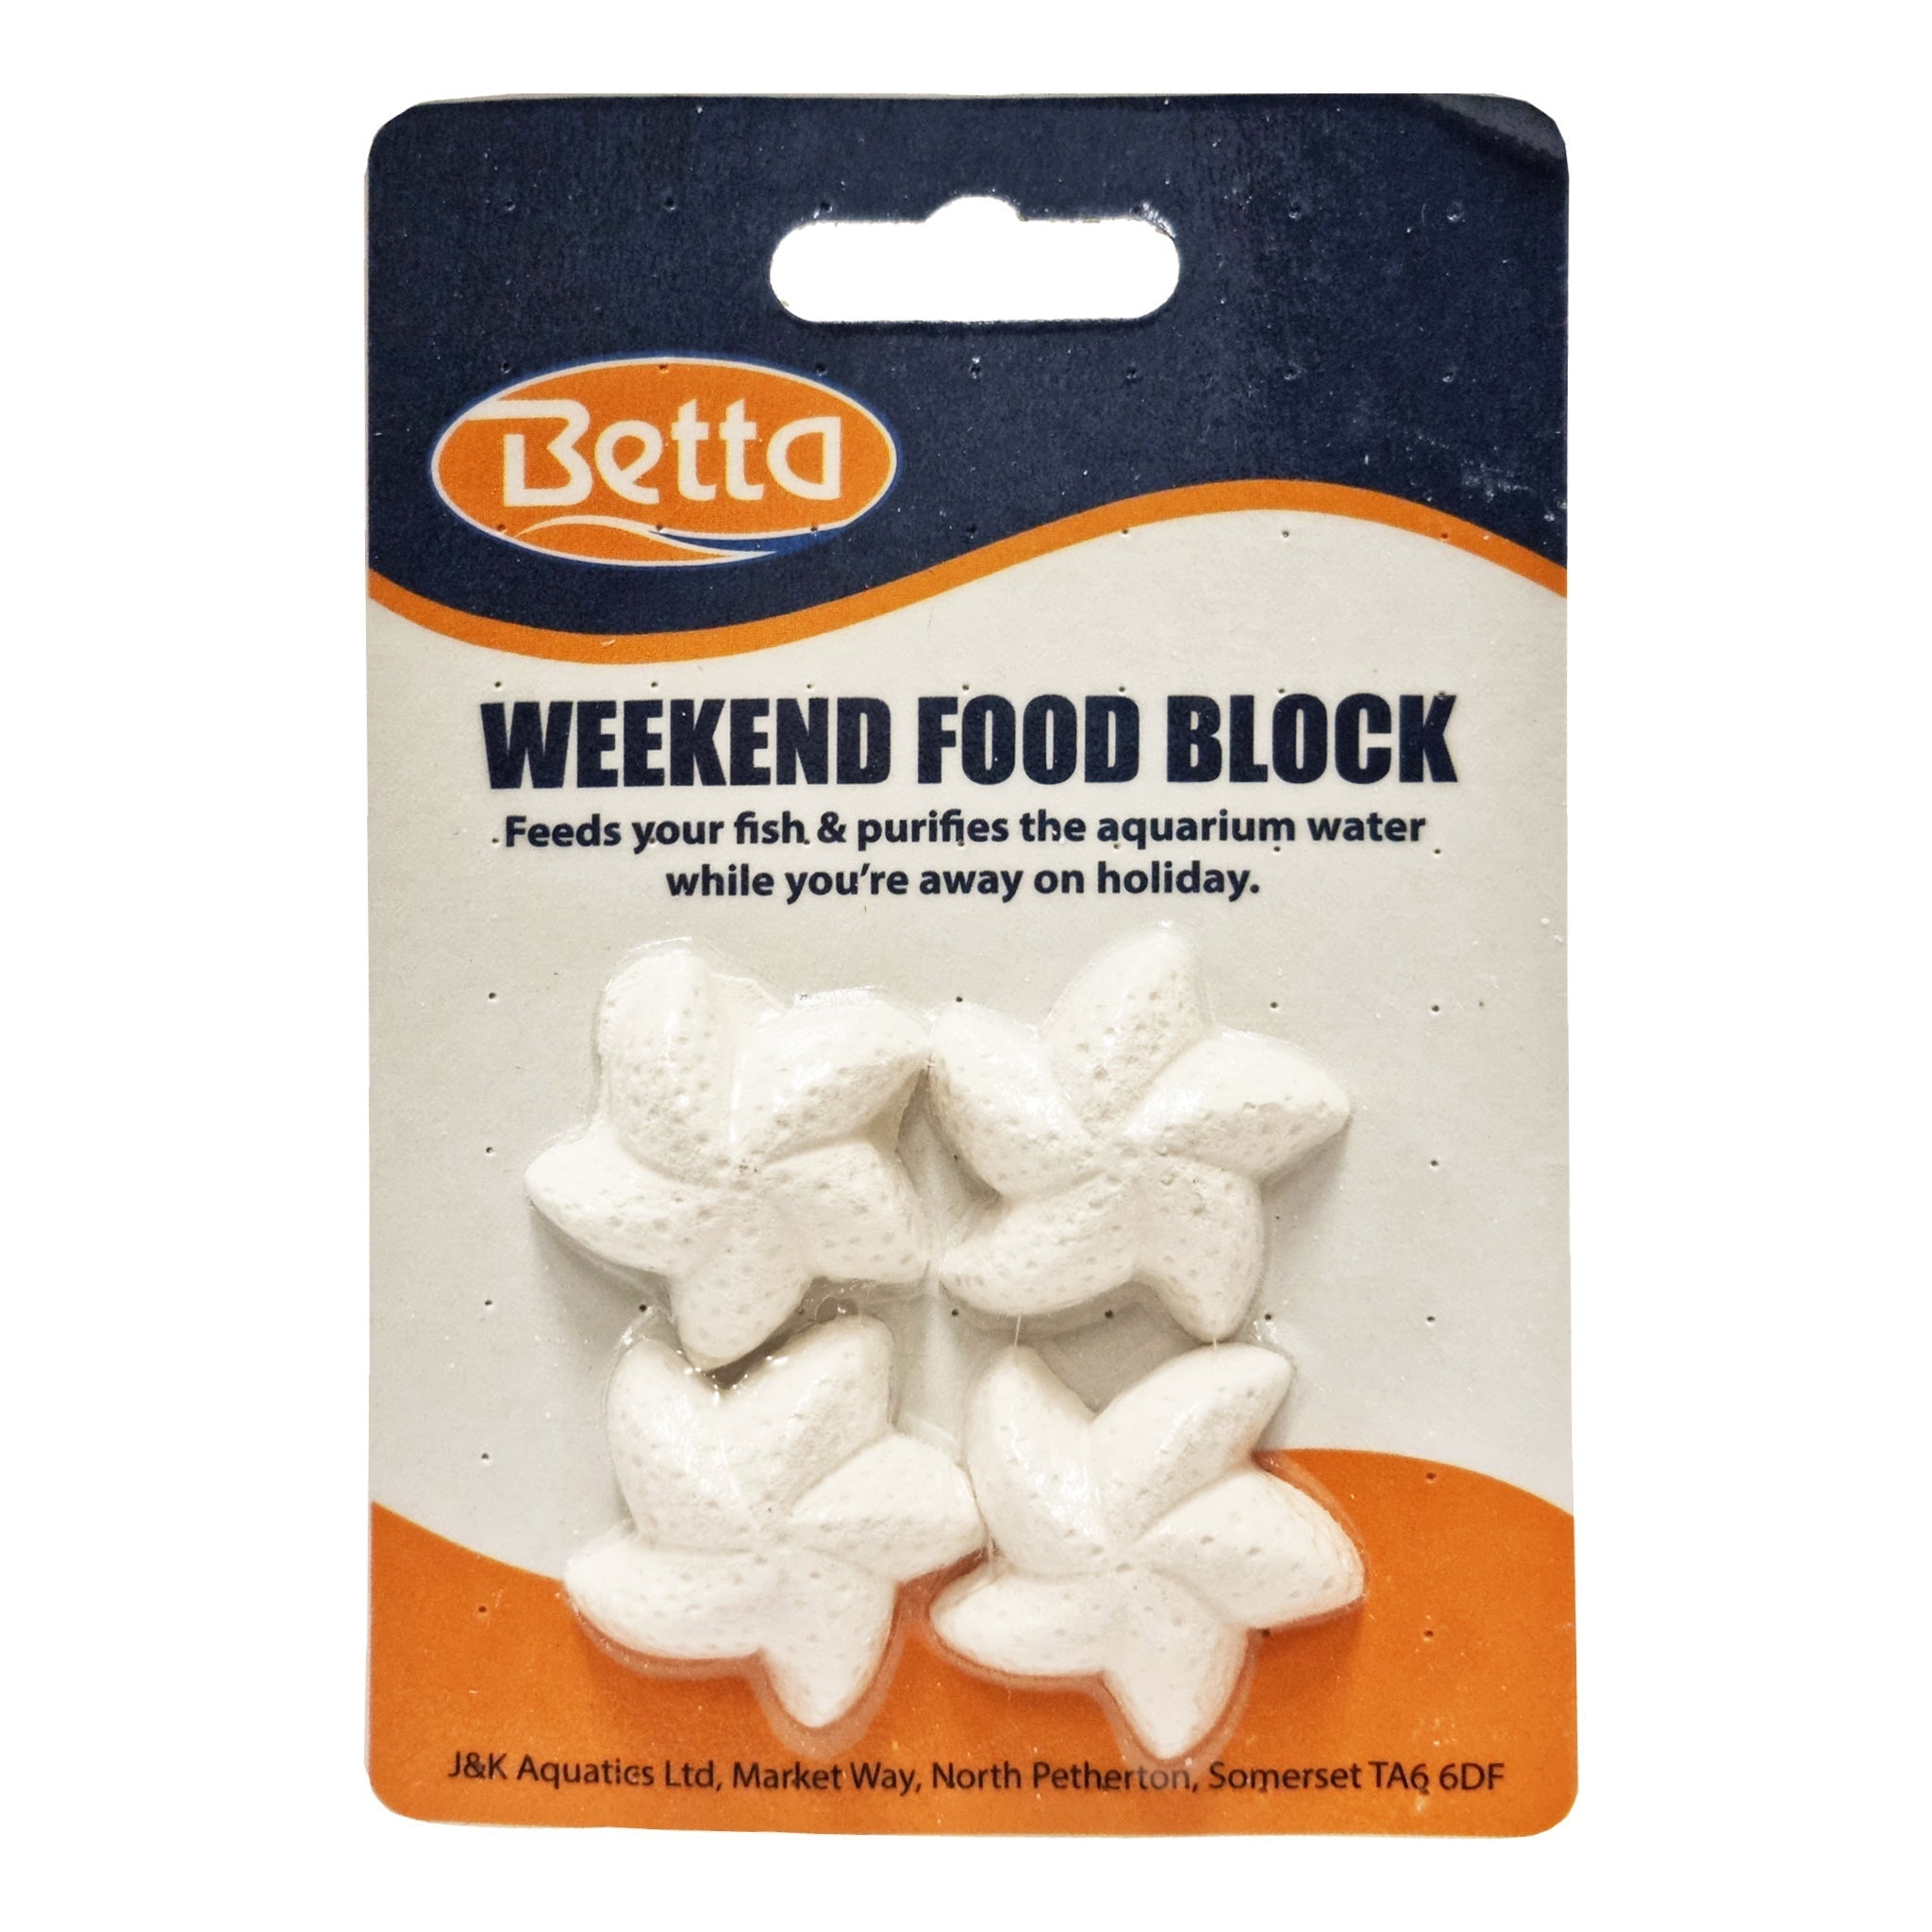 Betta Weekend Holiday Block - Weekend